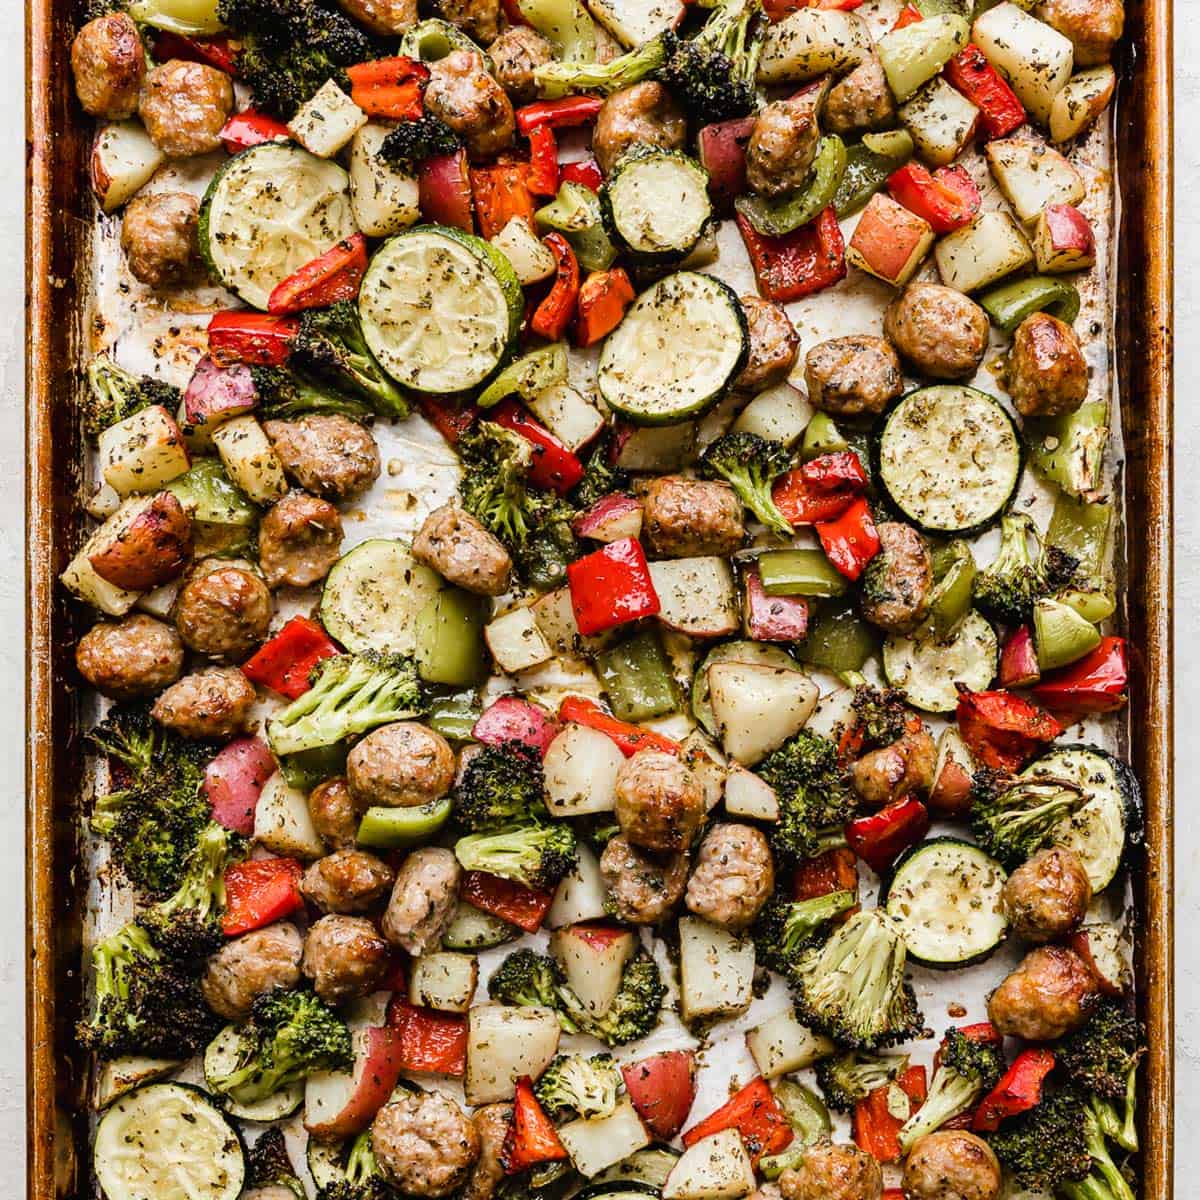 https://saltandbaker.com/wp-content/uploads/2018/05/Sheet-pan-italian-sausage-vegetable-bake-square.jpg